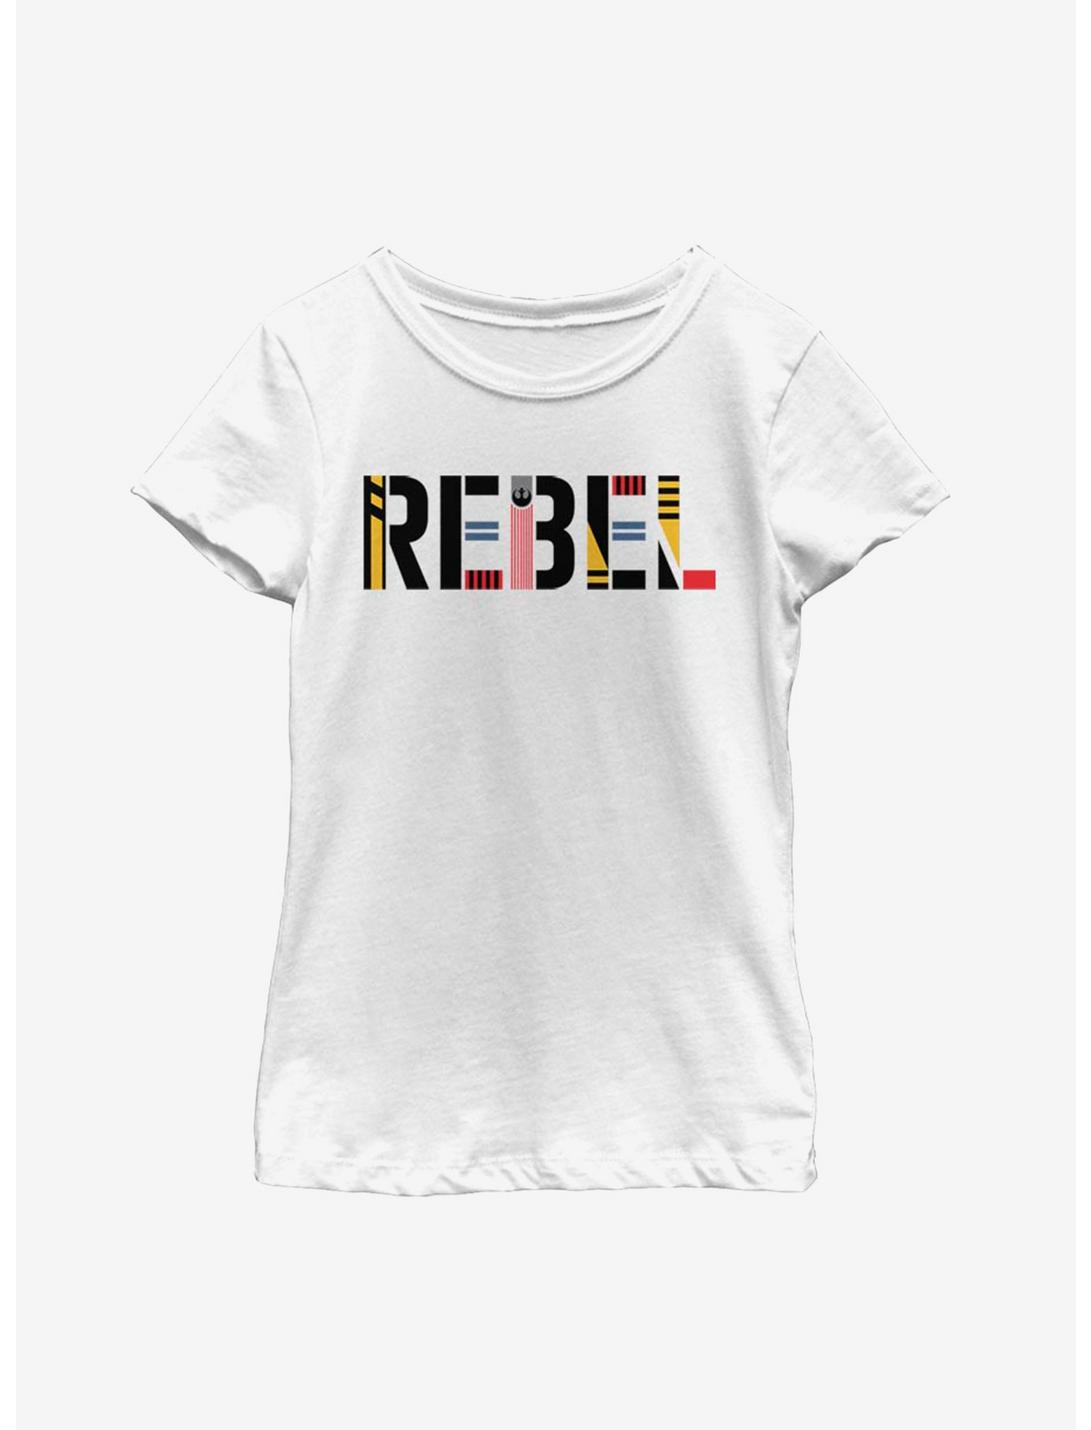 Star Wars Episode IX The Rise Of Skywalker Rebel Simple Youth Girls T-Shirt, WHITE, hi-res